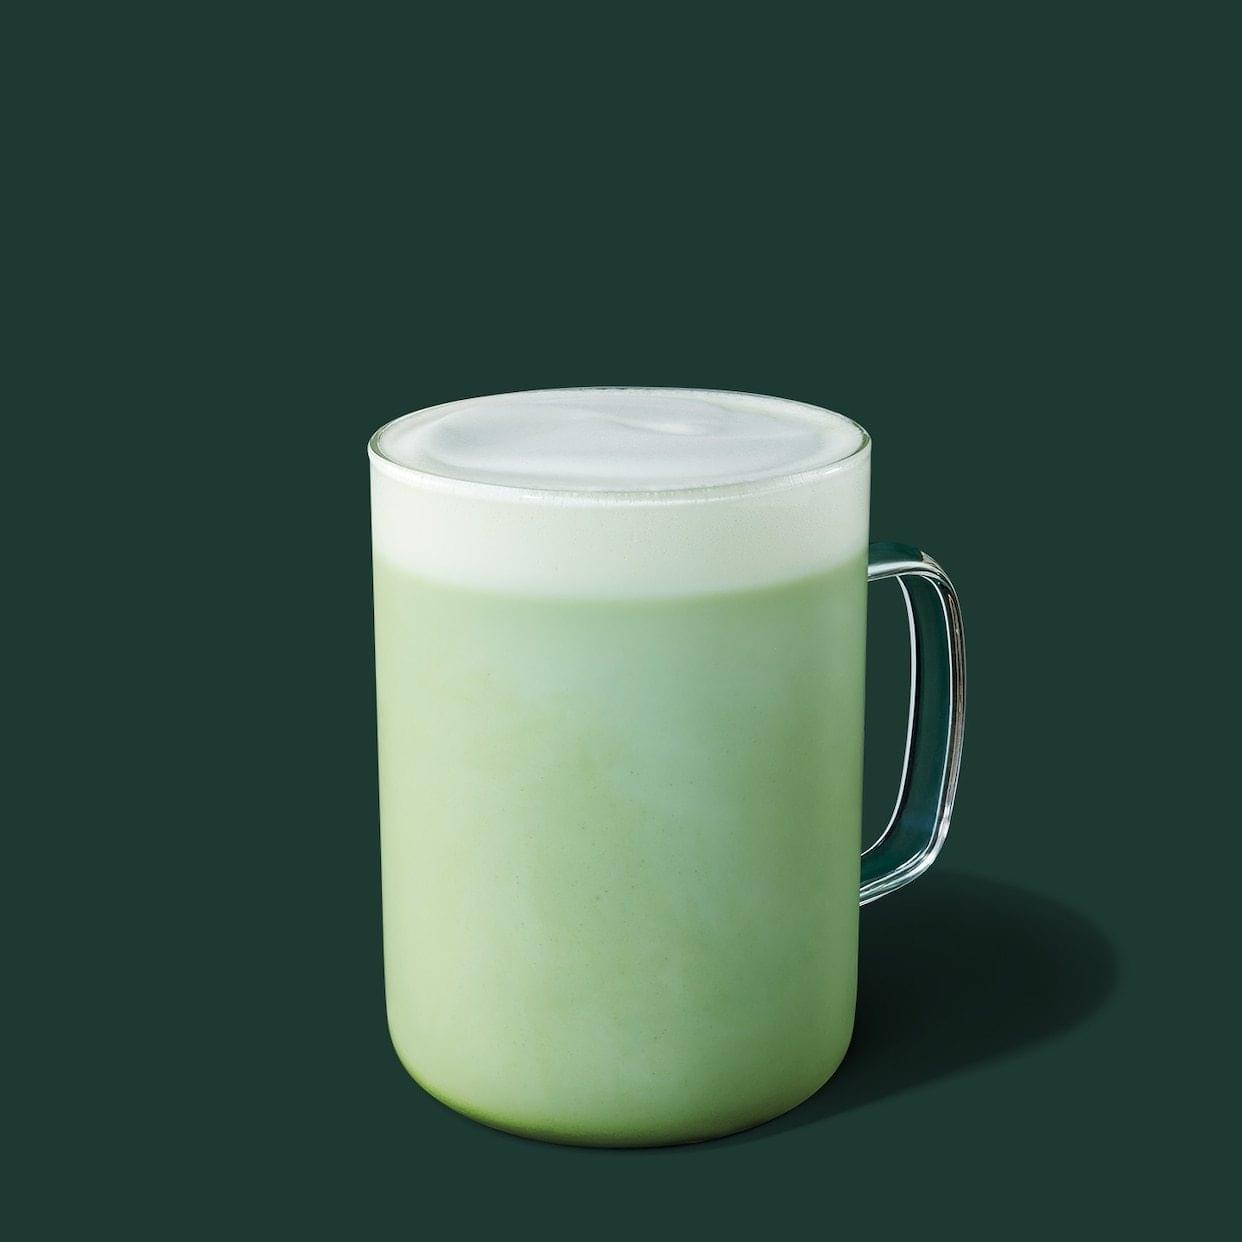 Starbucks Venti Matcha Green Tea Latte Nutrition Facts